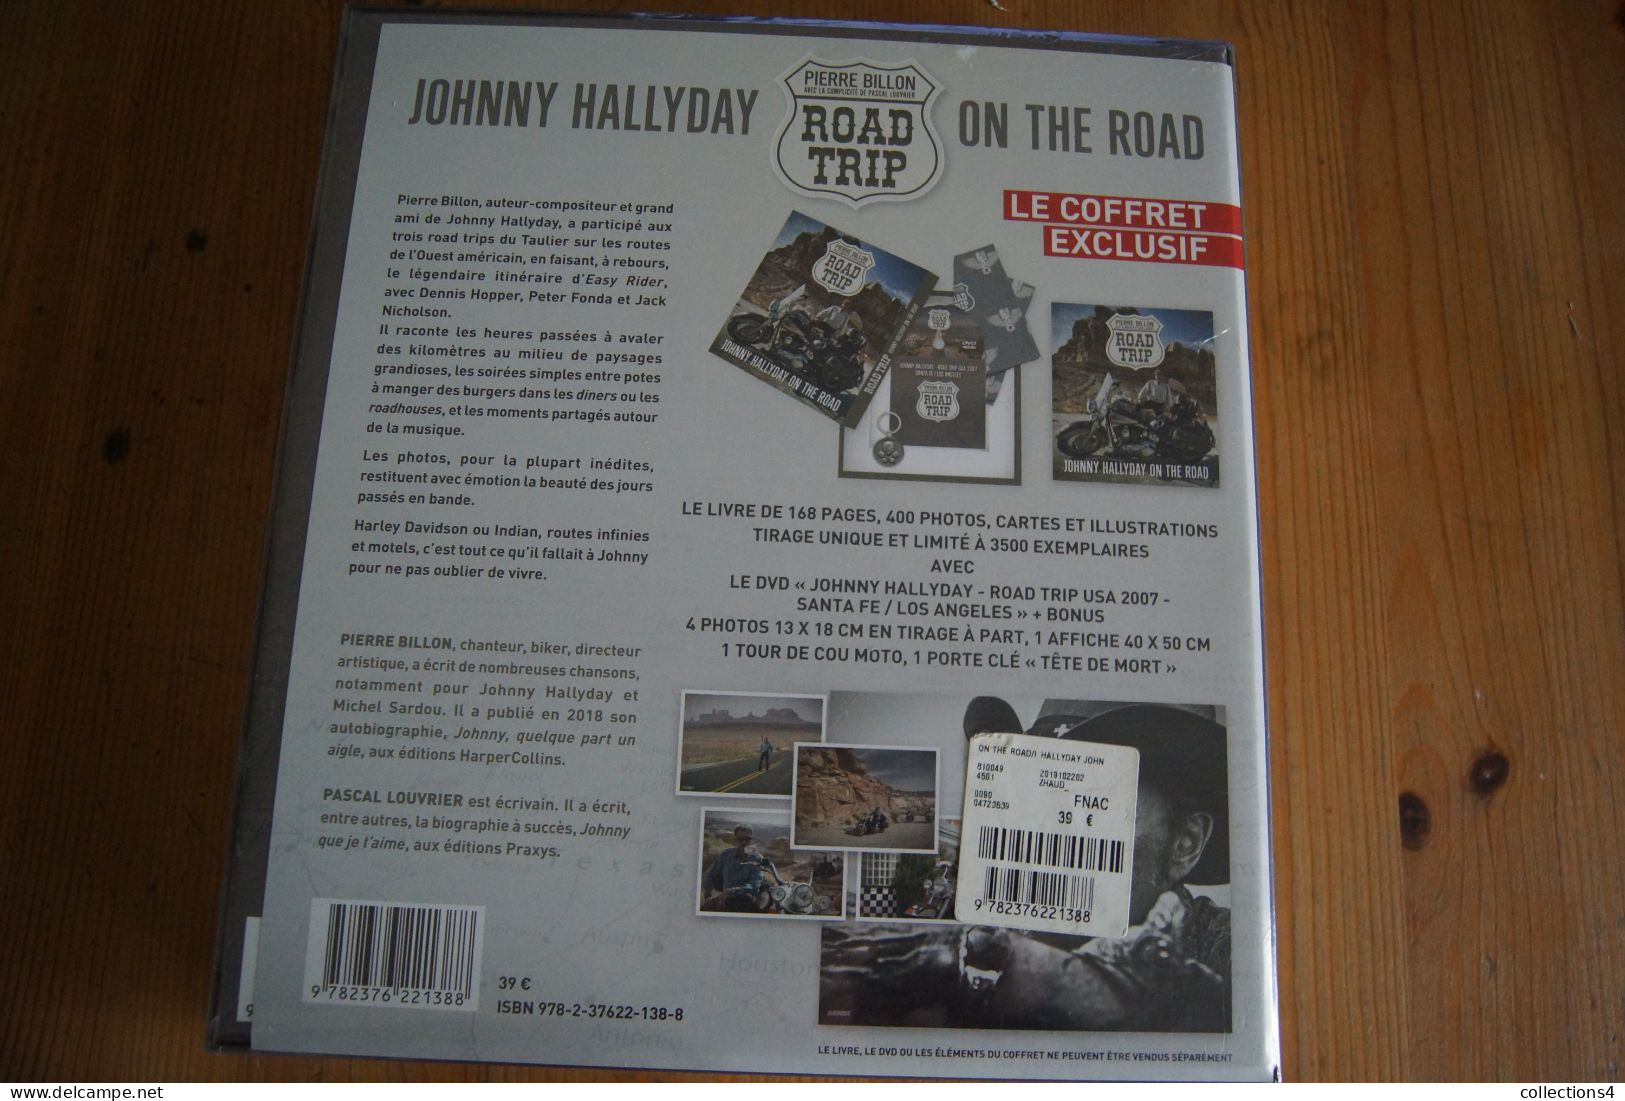 JOHNNY HALLYDAY ON THE ROAD EDITION SPECIALE FNAC RARE COFFRET  LIVRE DVD PHOTOS AFFICHE TOUR DE COU PORTE CLEF NEUF - Music On DVD